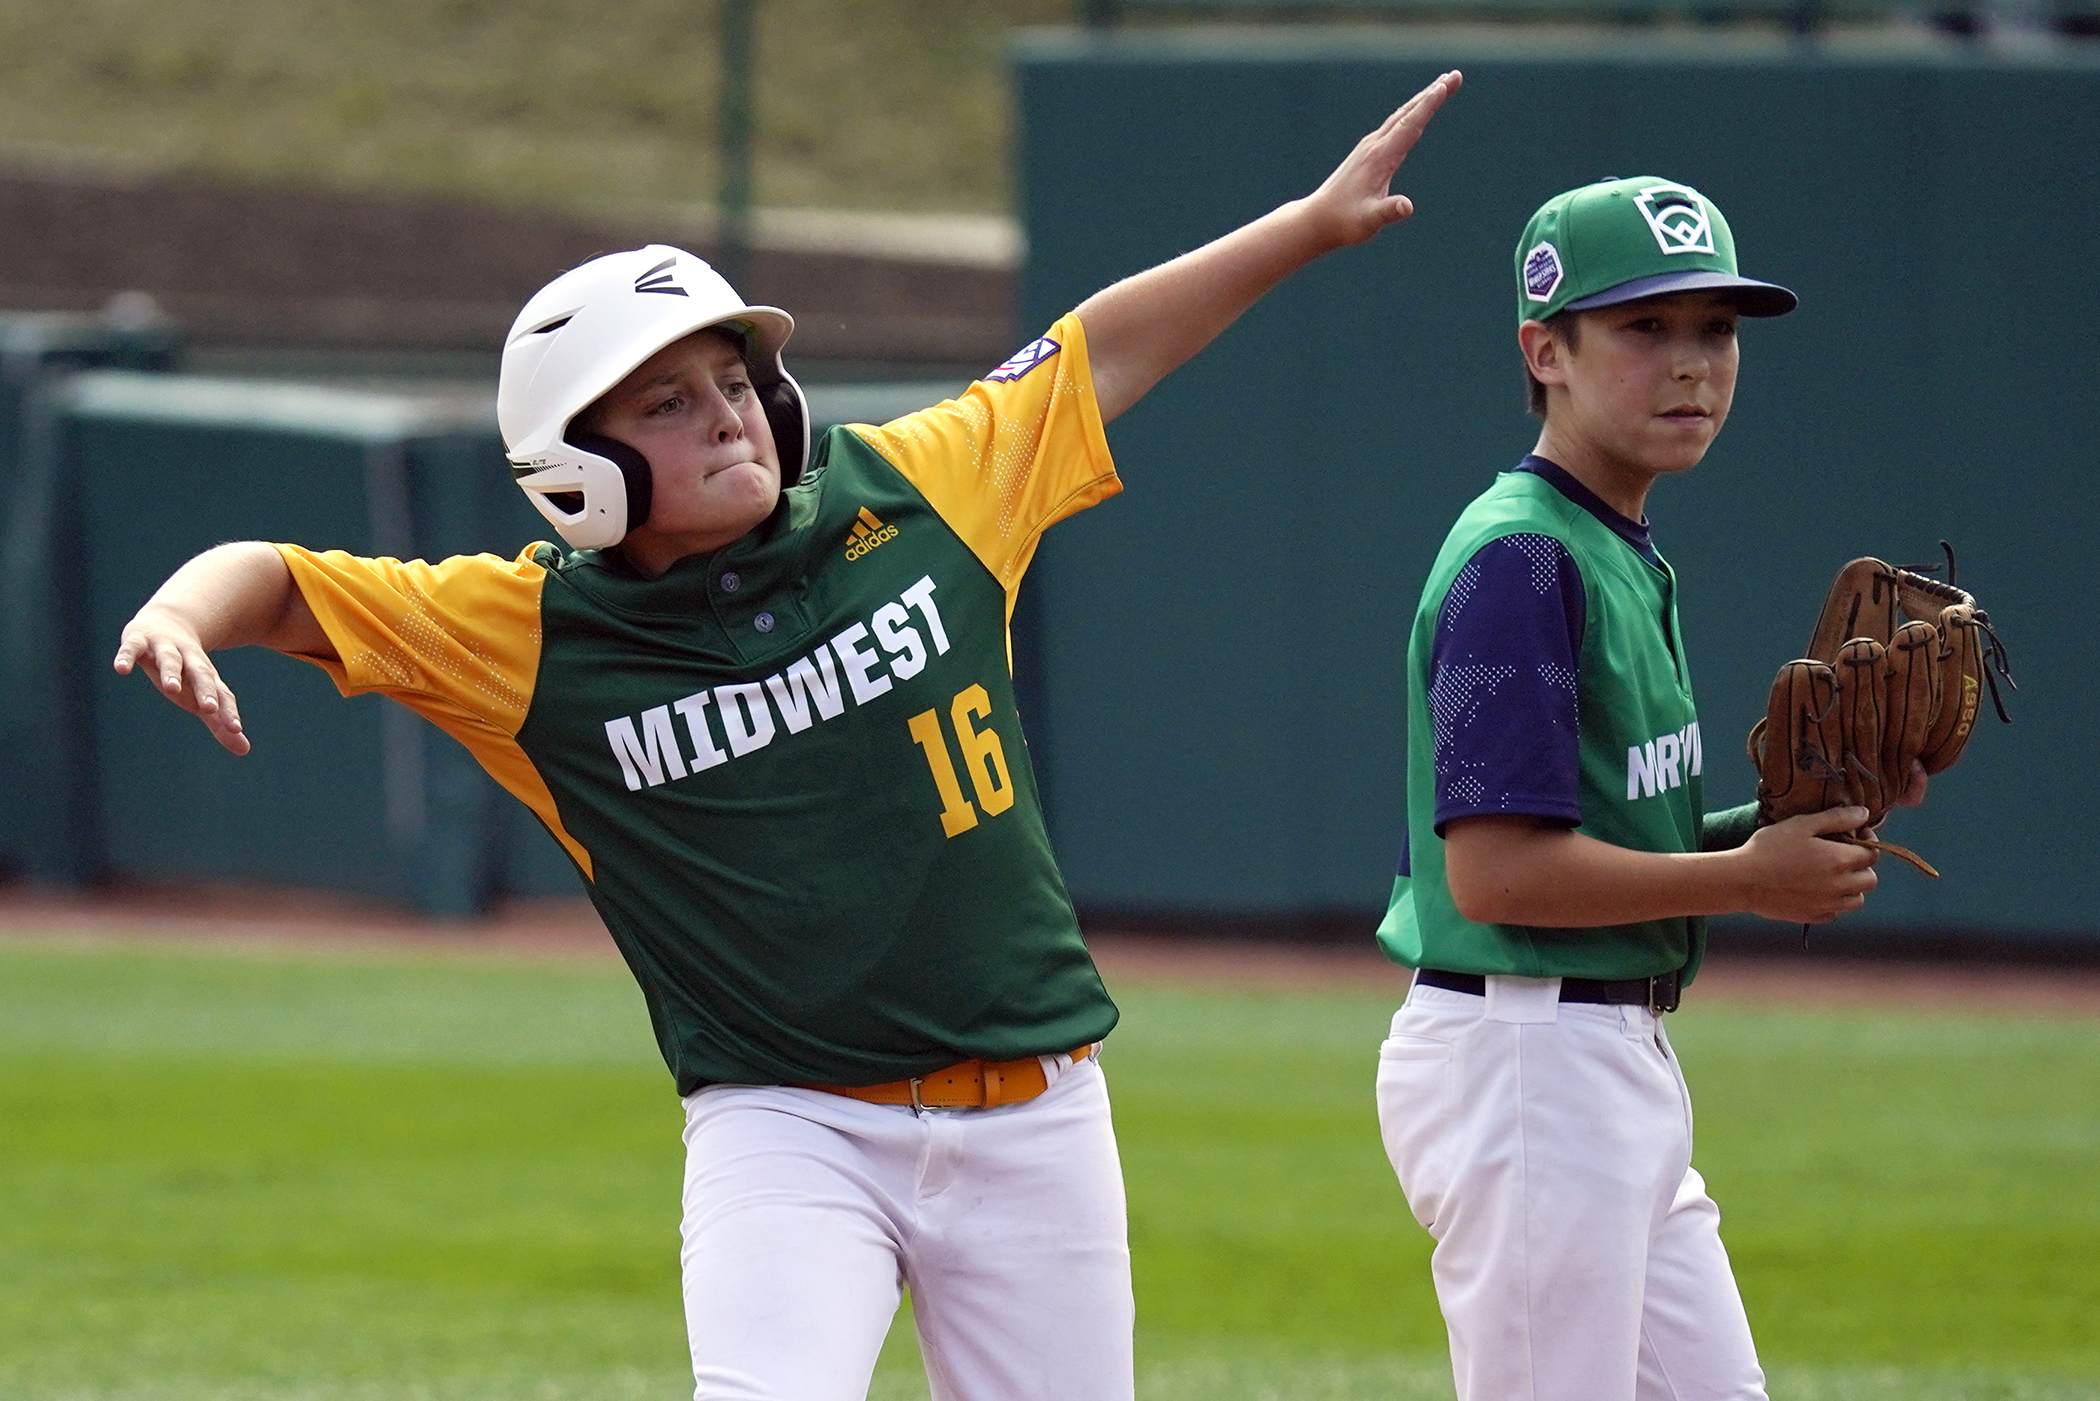 Midwest Set Baseball Junior 